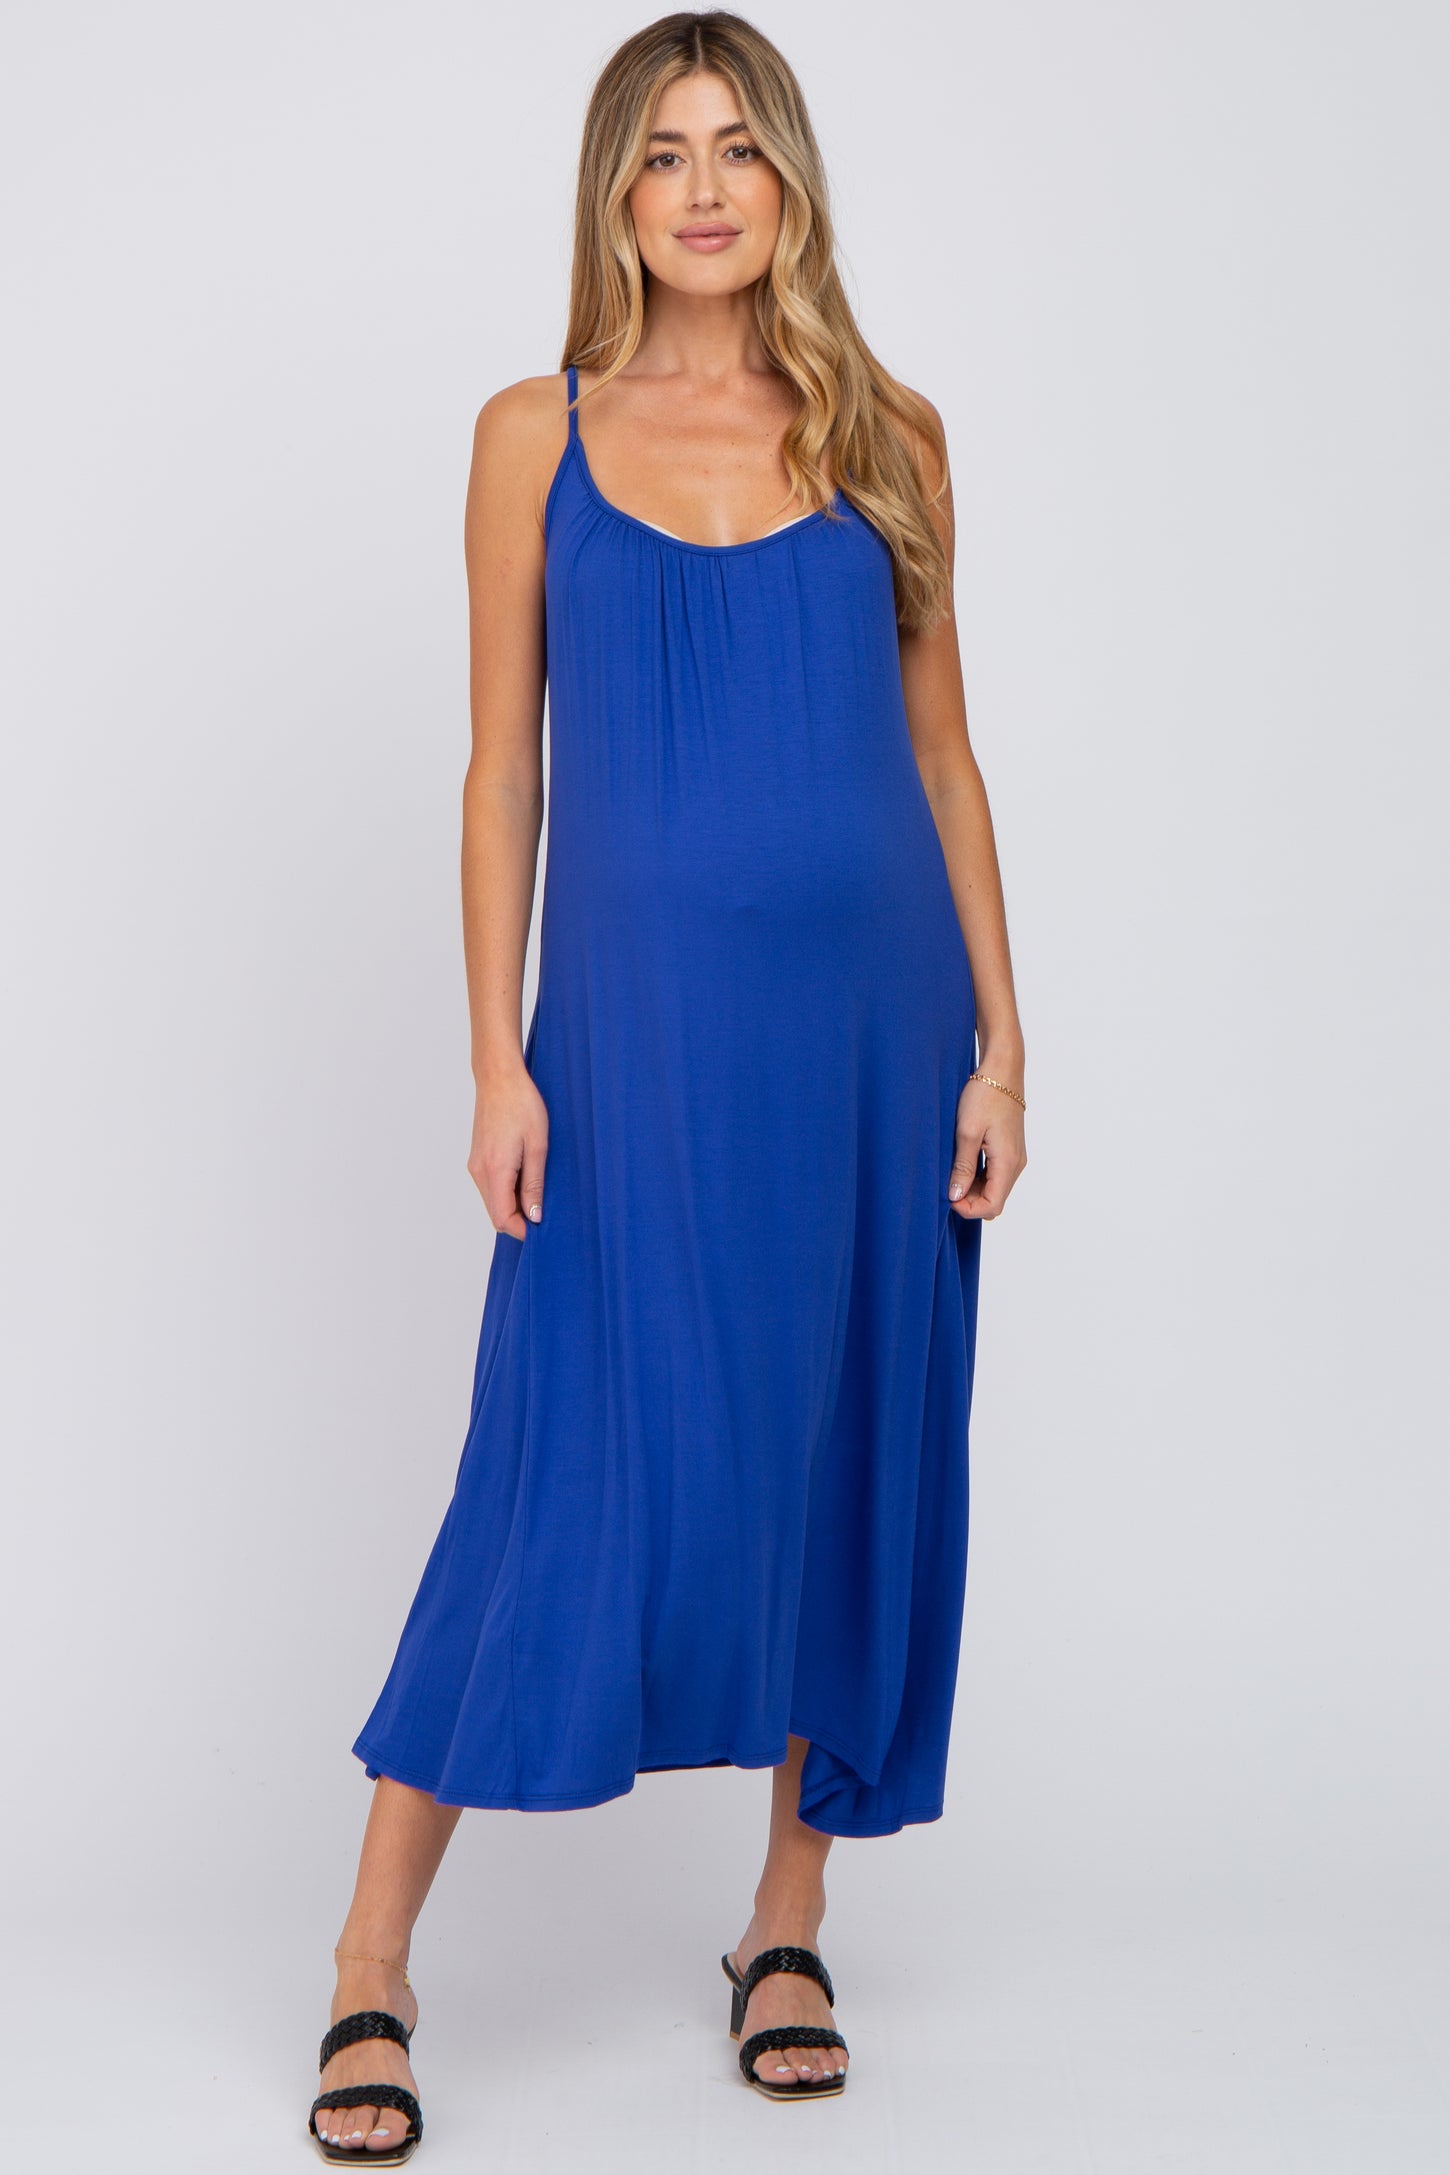 Royal Blue Solid Sleeveless Maternity Maxi Dress